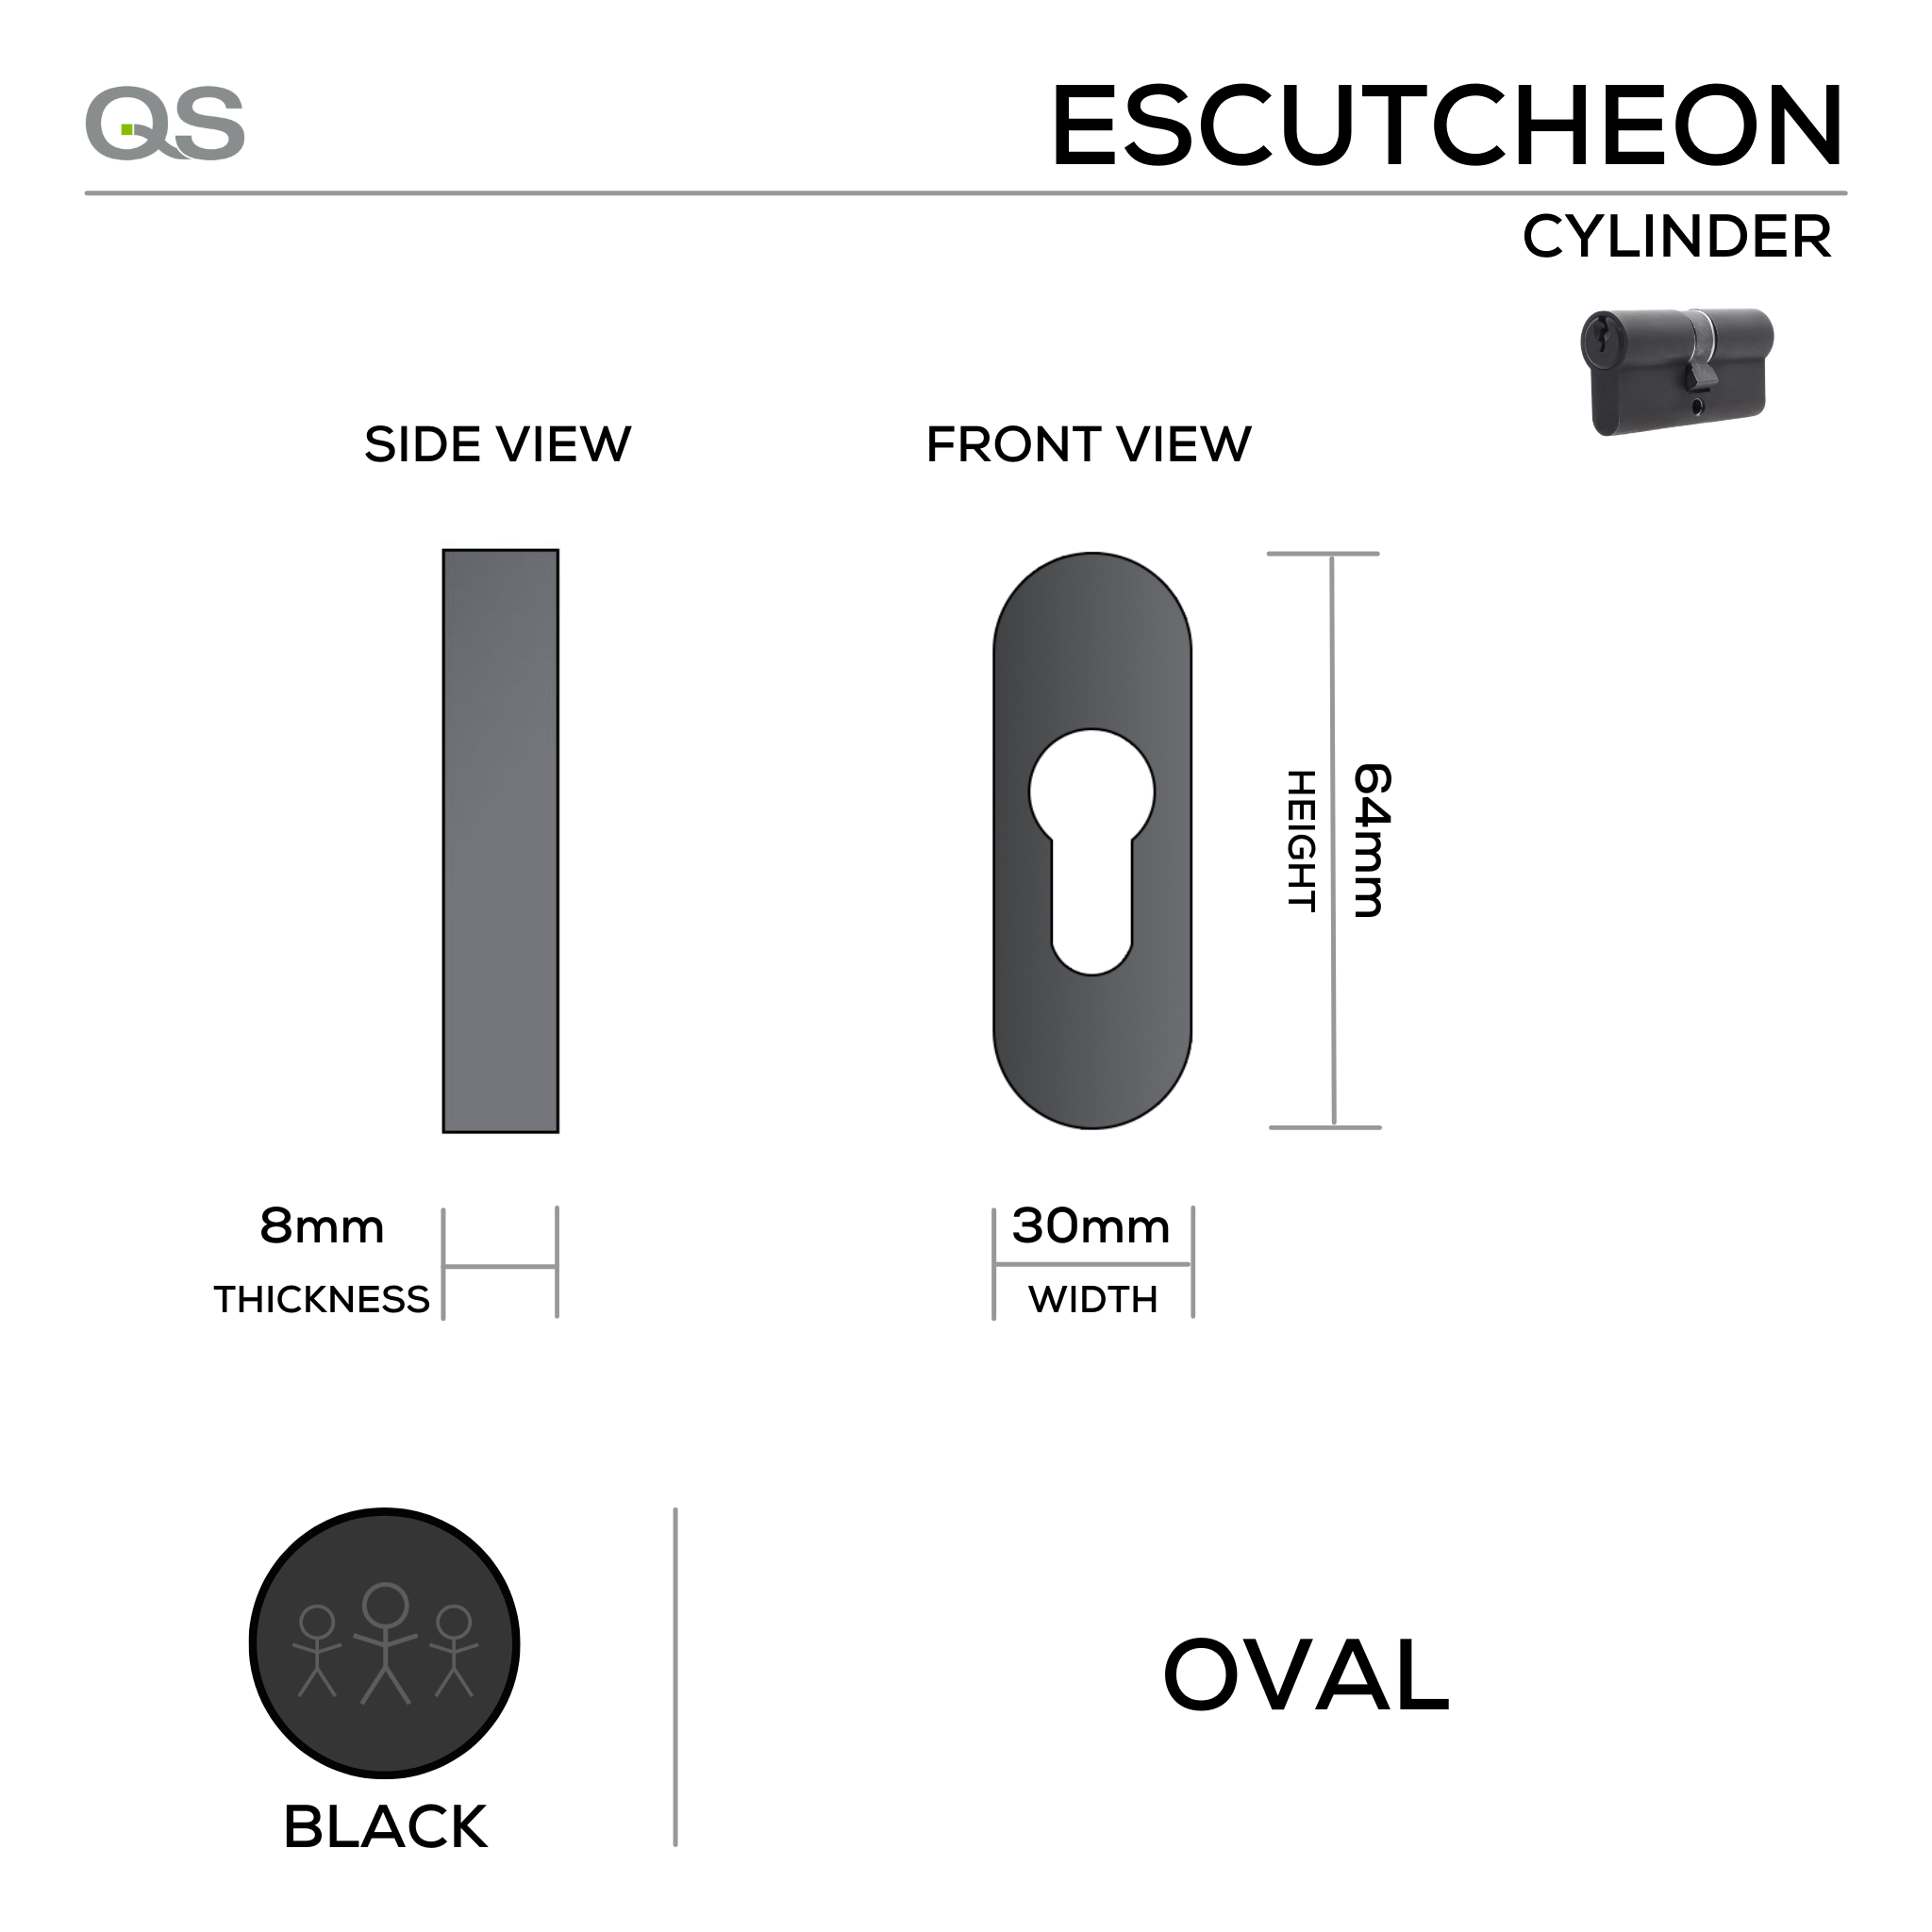 QS4405 BLACK, Cylinder Escutcheon, Oval Rose, 64mm (h) x 30mm (w) x 8mm (t), Black, QS